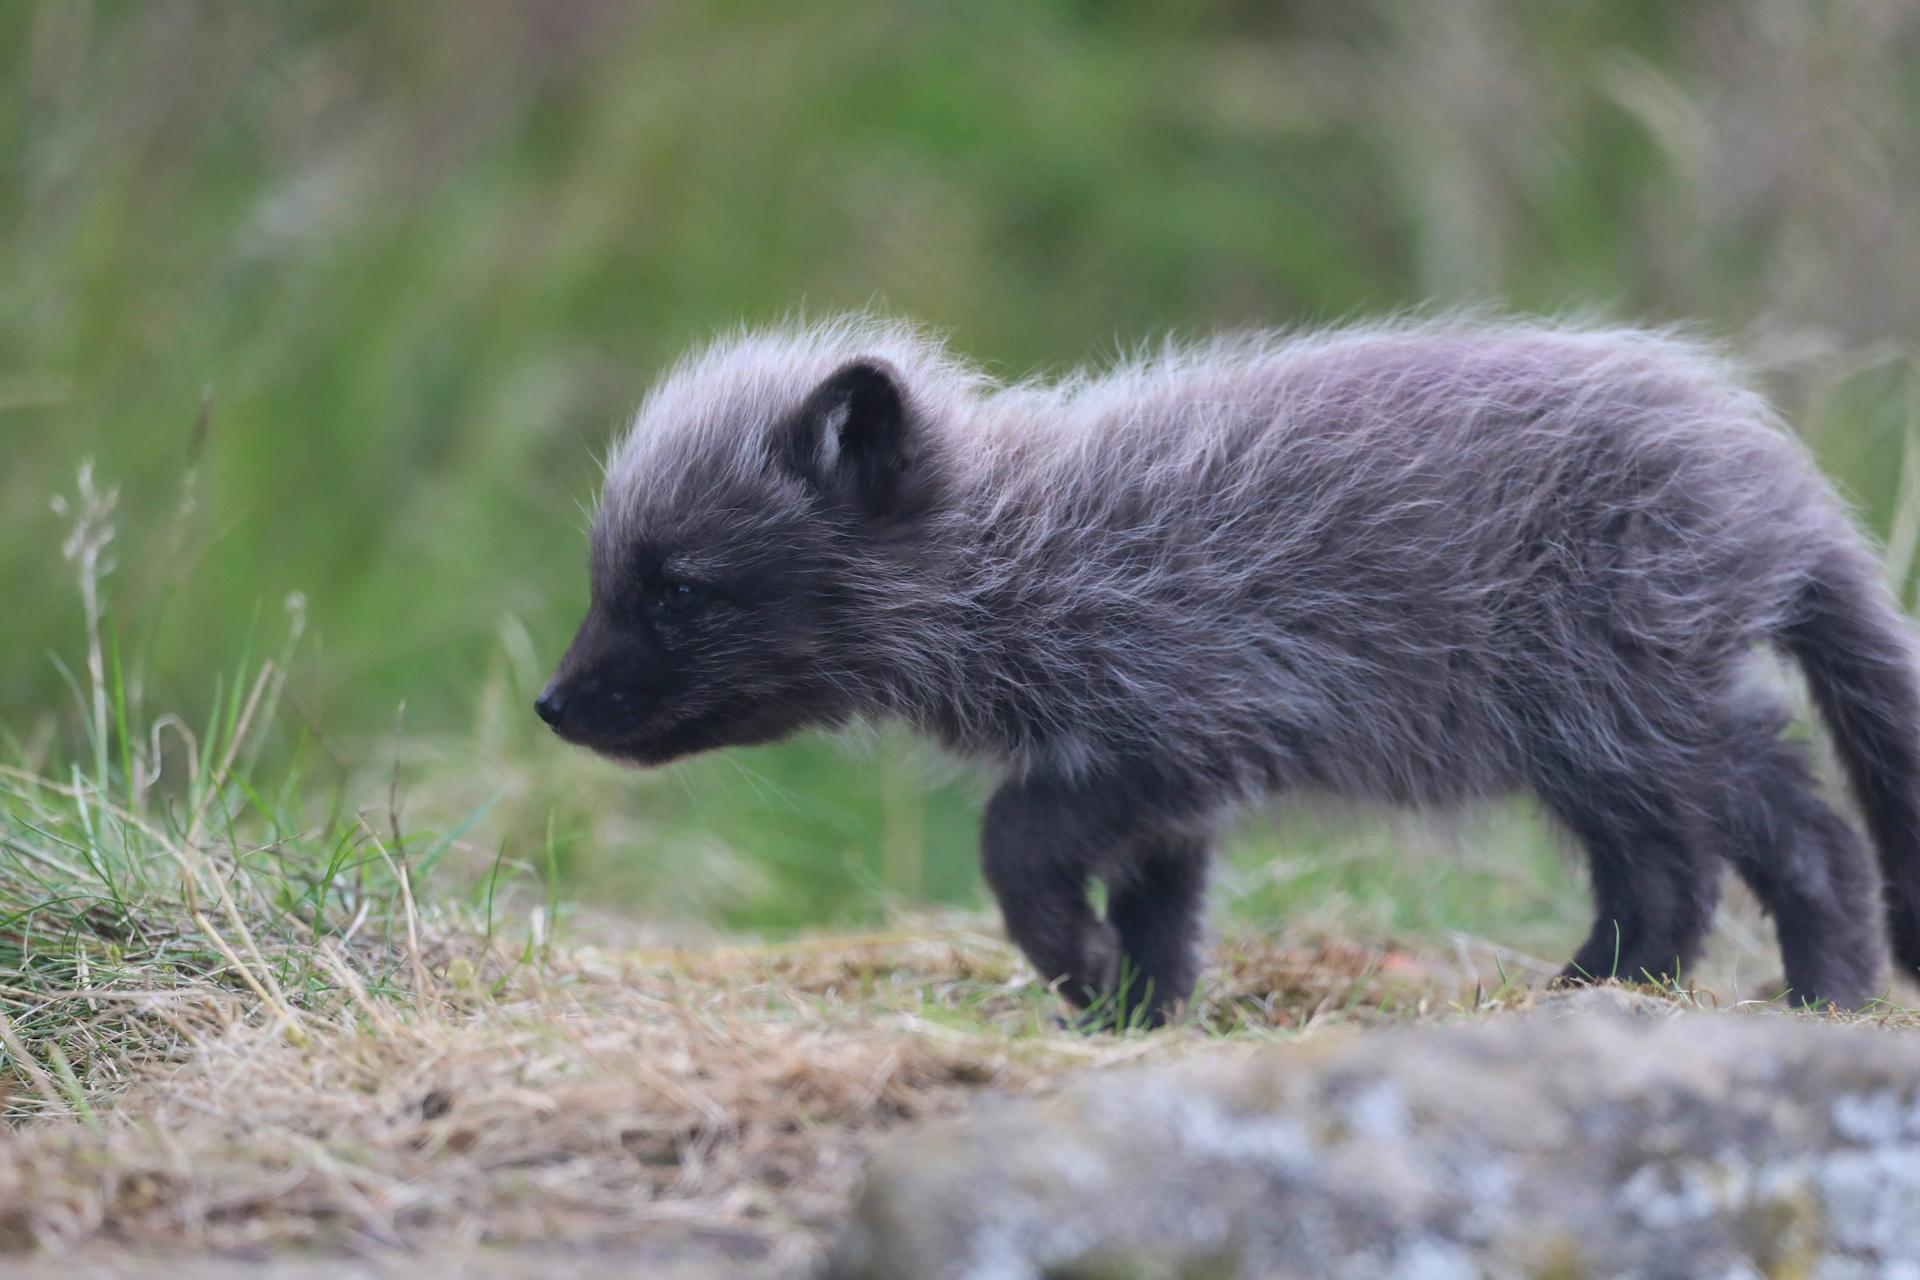 Arctic fox cub at Highland Wildlife Park walking through grass

Image: AMY MIDDLETON 2023